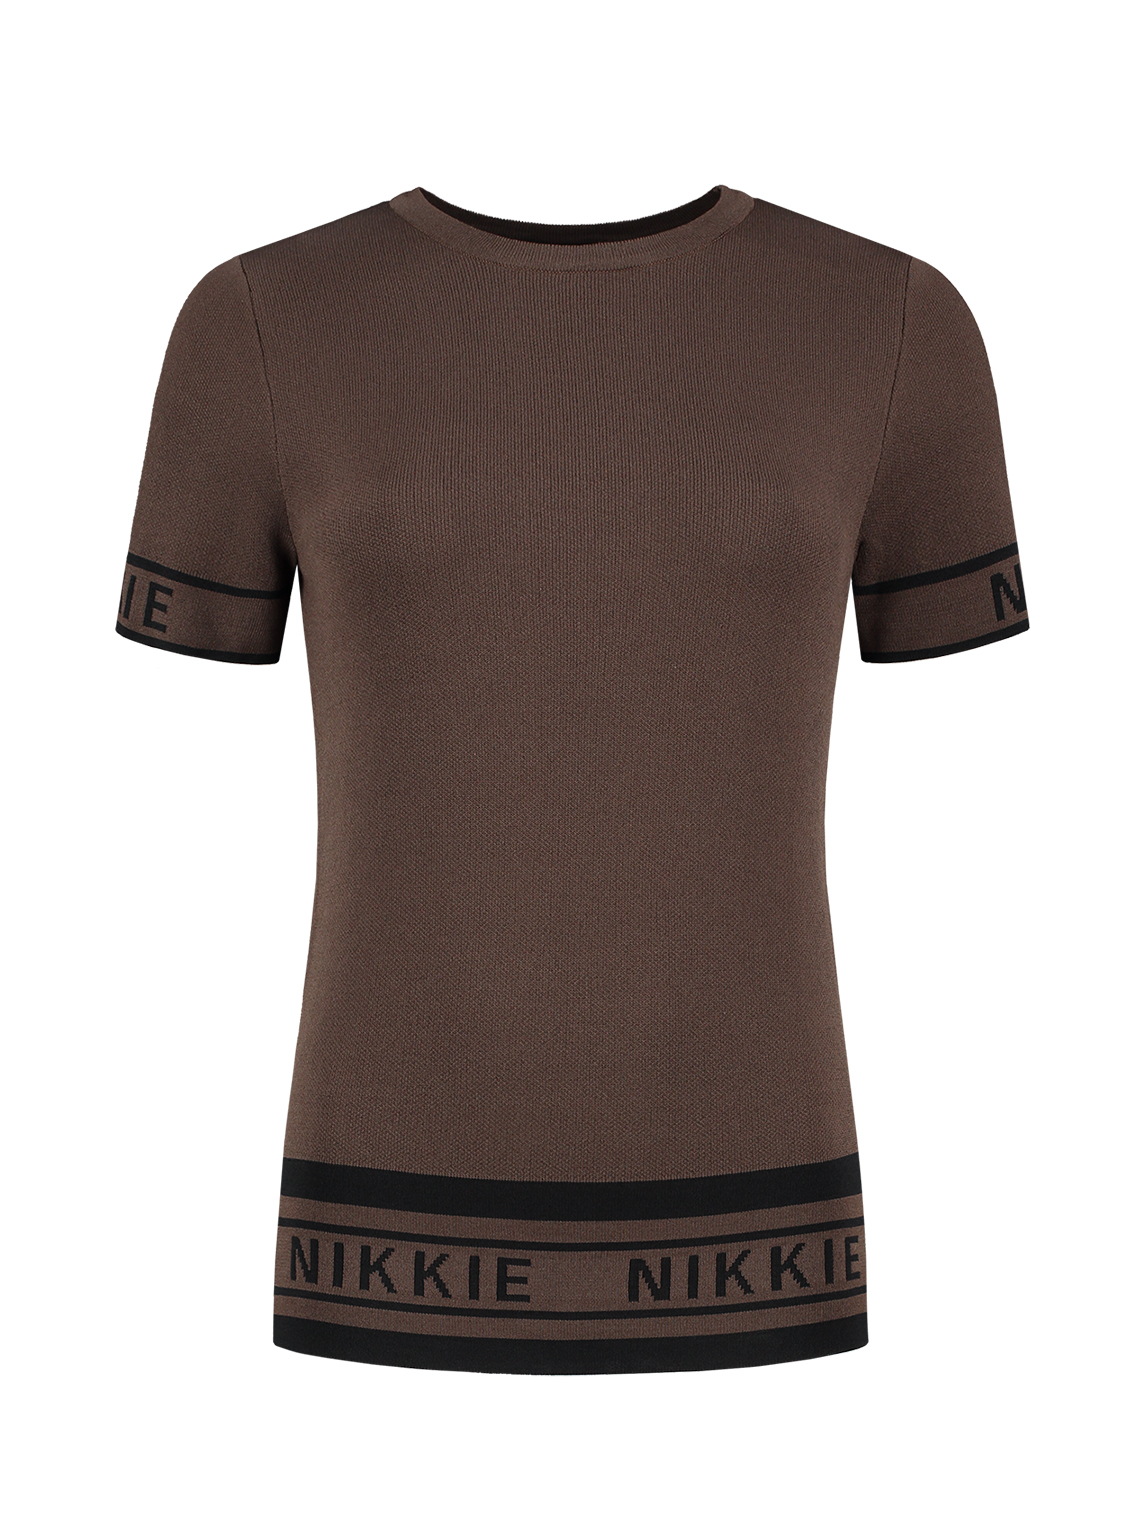 Donker bruin dames shirt Nikkie - Jolien Top - N7-568 1905 5506